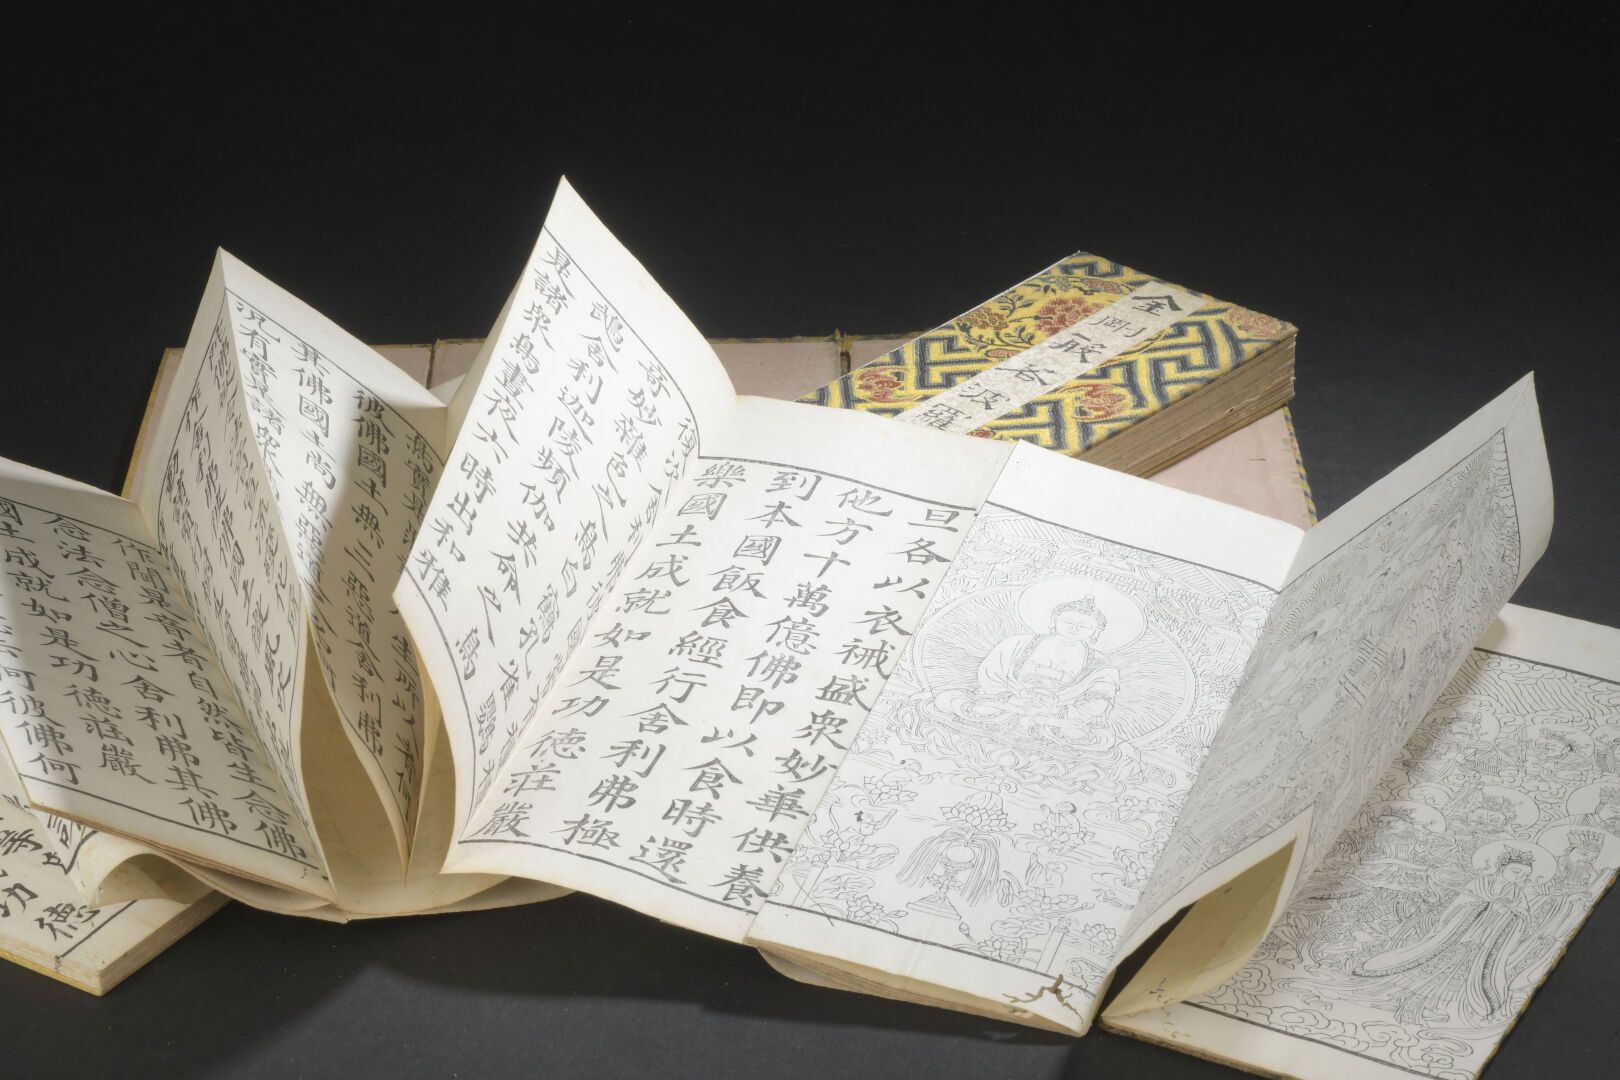 Null SUTRA DU DIAMANT et SUTRA D'AMITABHA
CHINE, XIXe siècle
Couvertures garnies&hellip;